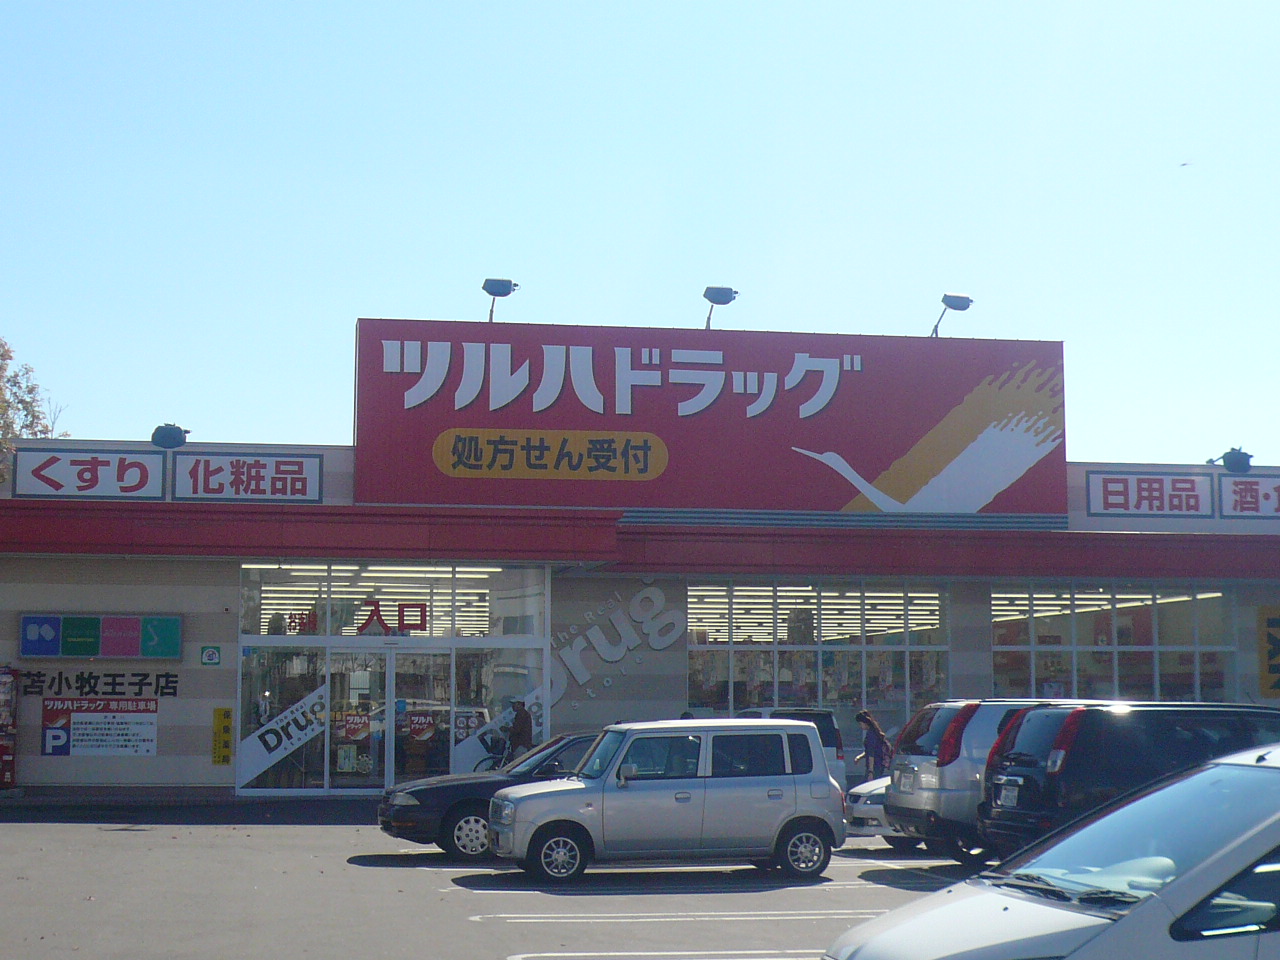 Dorakkusutoa. Tsuruha drag Tomakomai Prince shop 1161m until (drugstore)